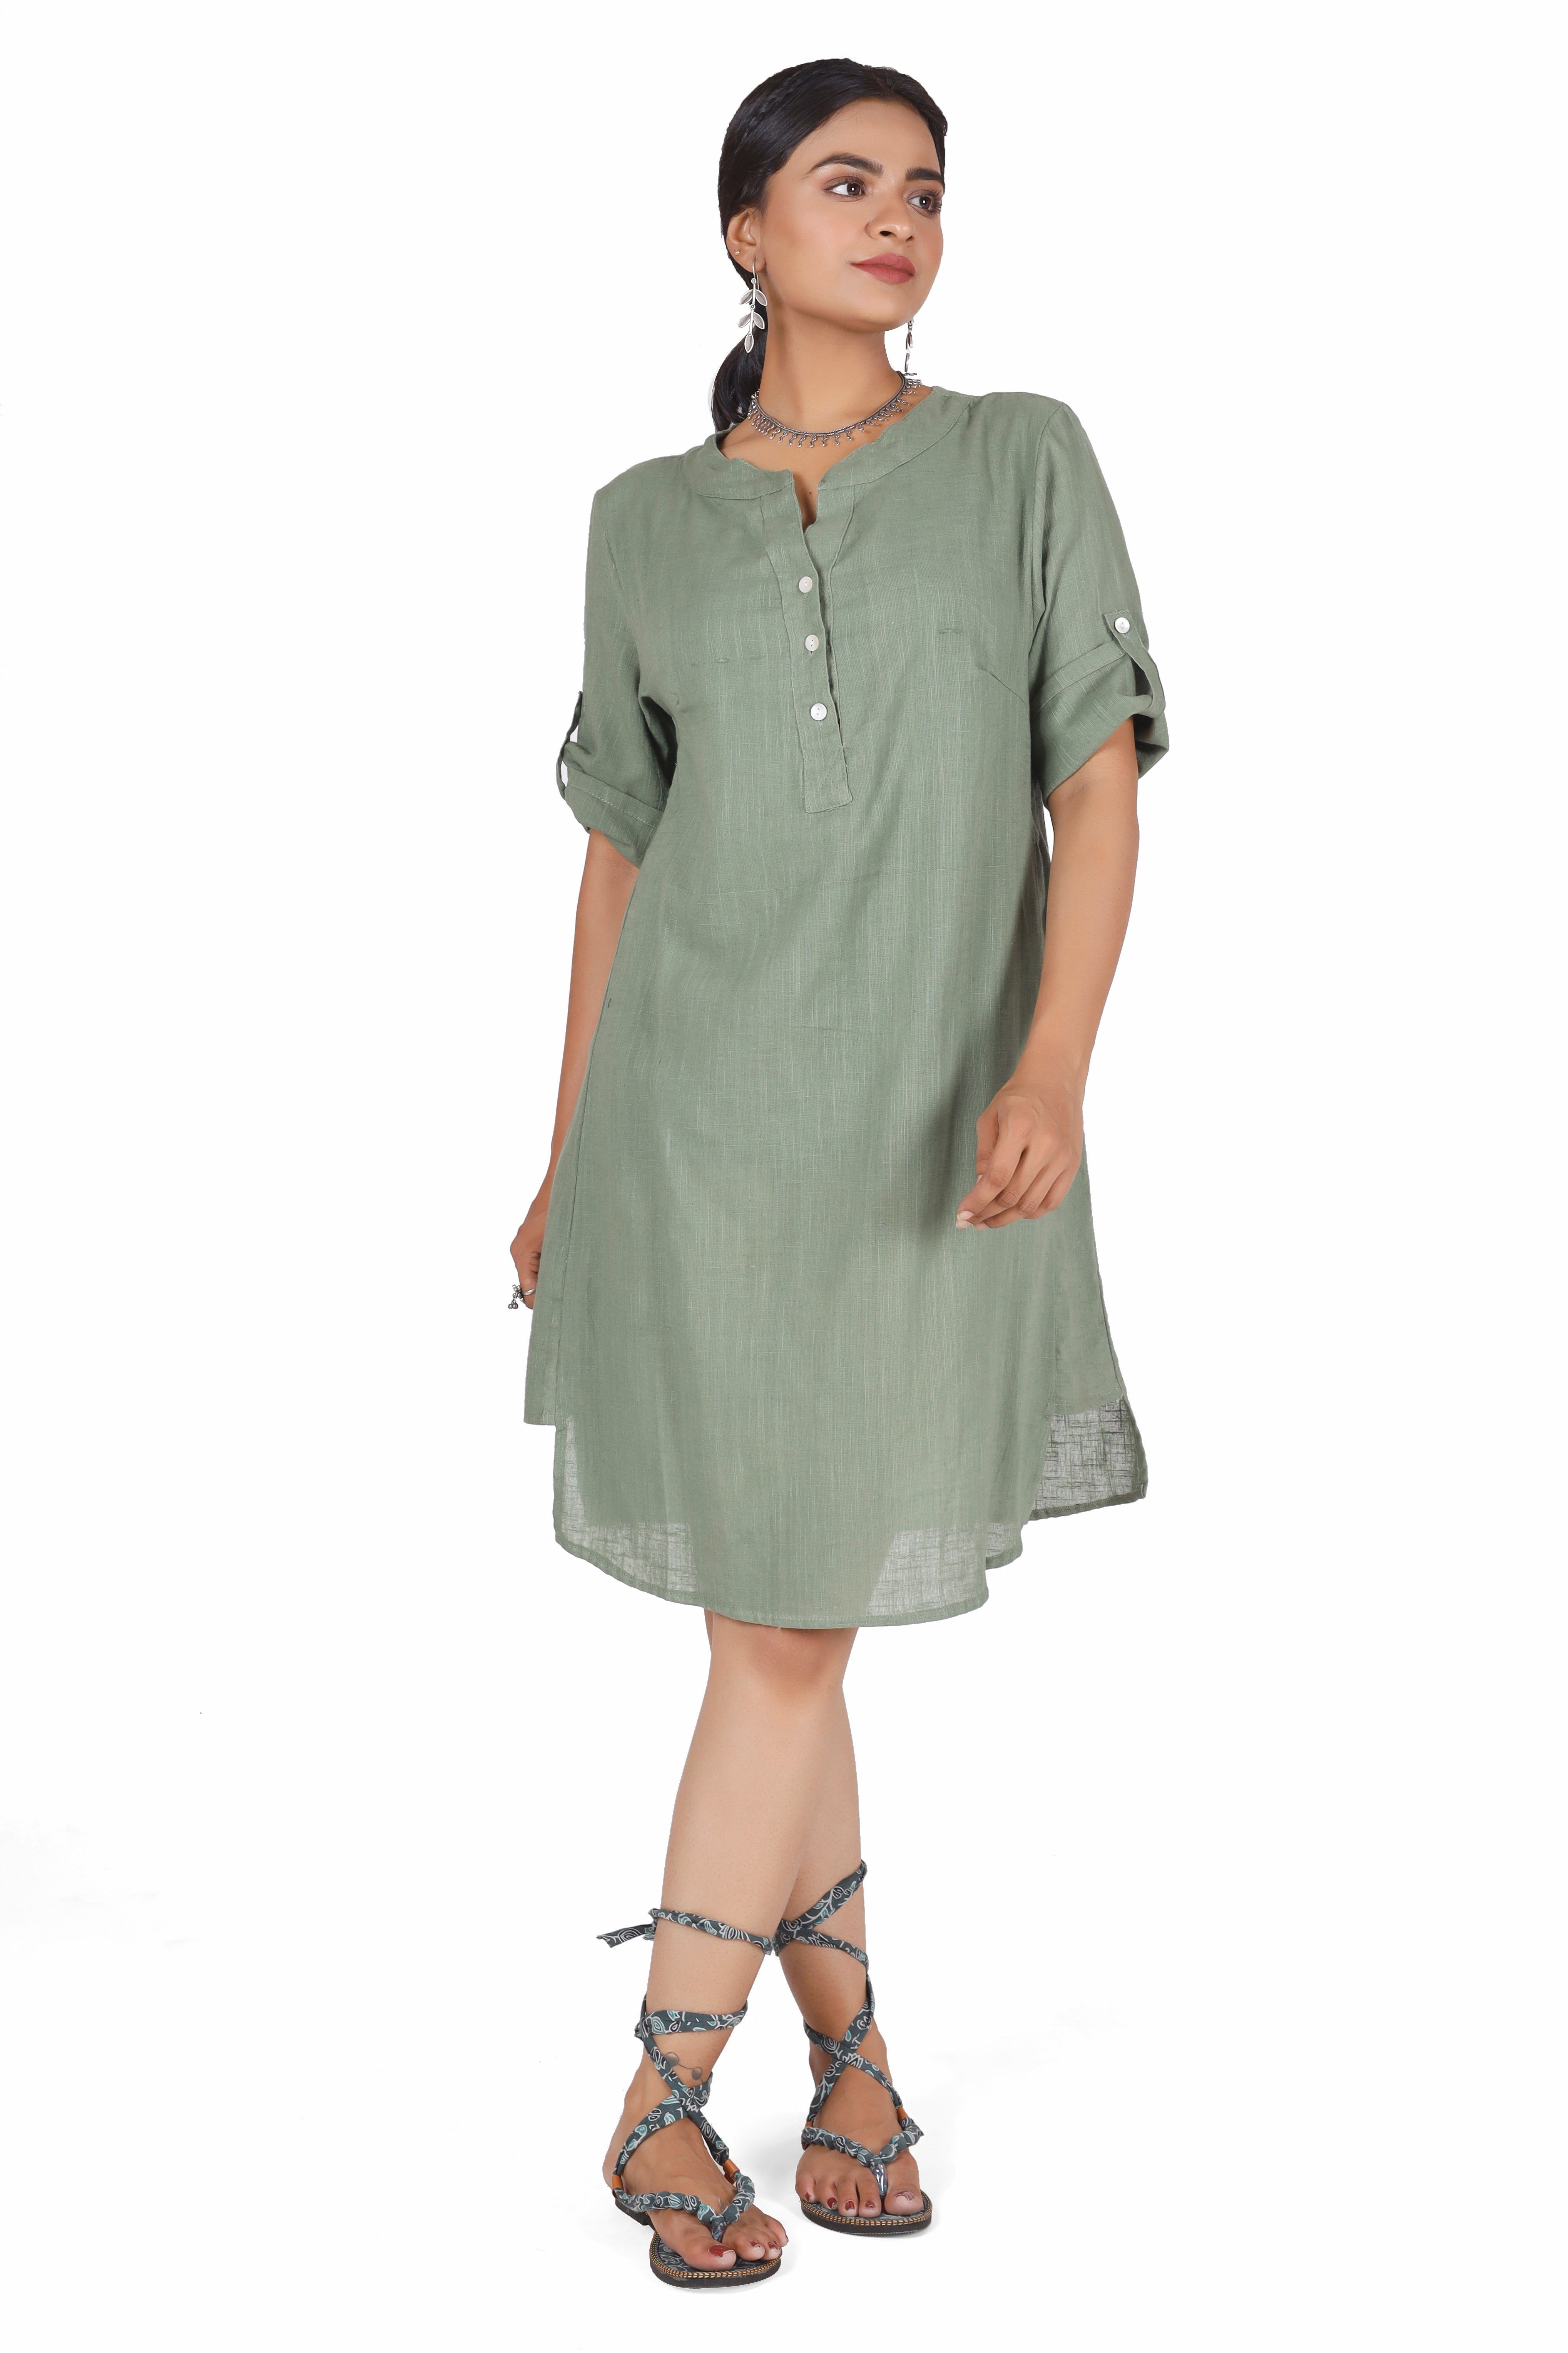 Guru-Shop Longbluse Lange Baumwoll Blusentunika, Bekleidung Hemd-Tunika alternative olivgrün 